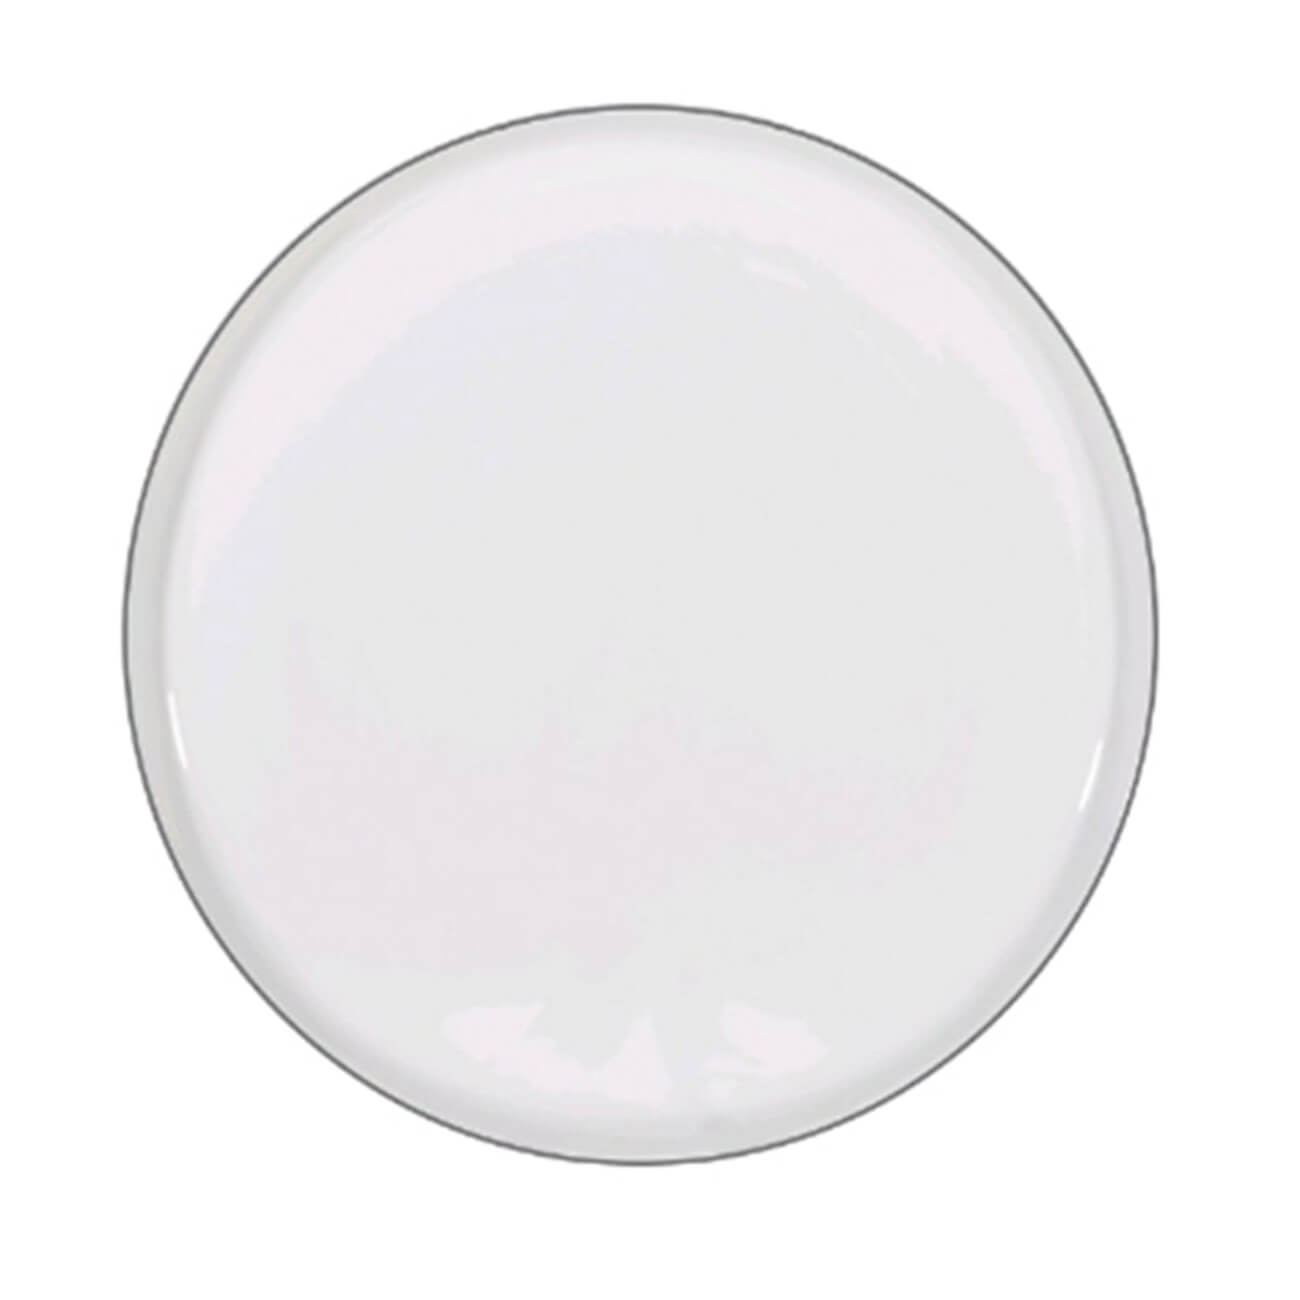 Тарелка десертная, 20 см, 2 шт, фарфор F, белая, Ideal silver тарелка dudson камелот 22 9 см